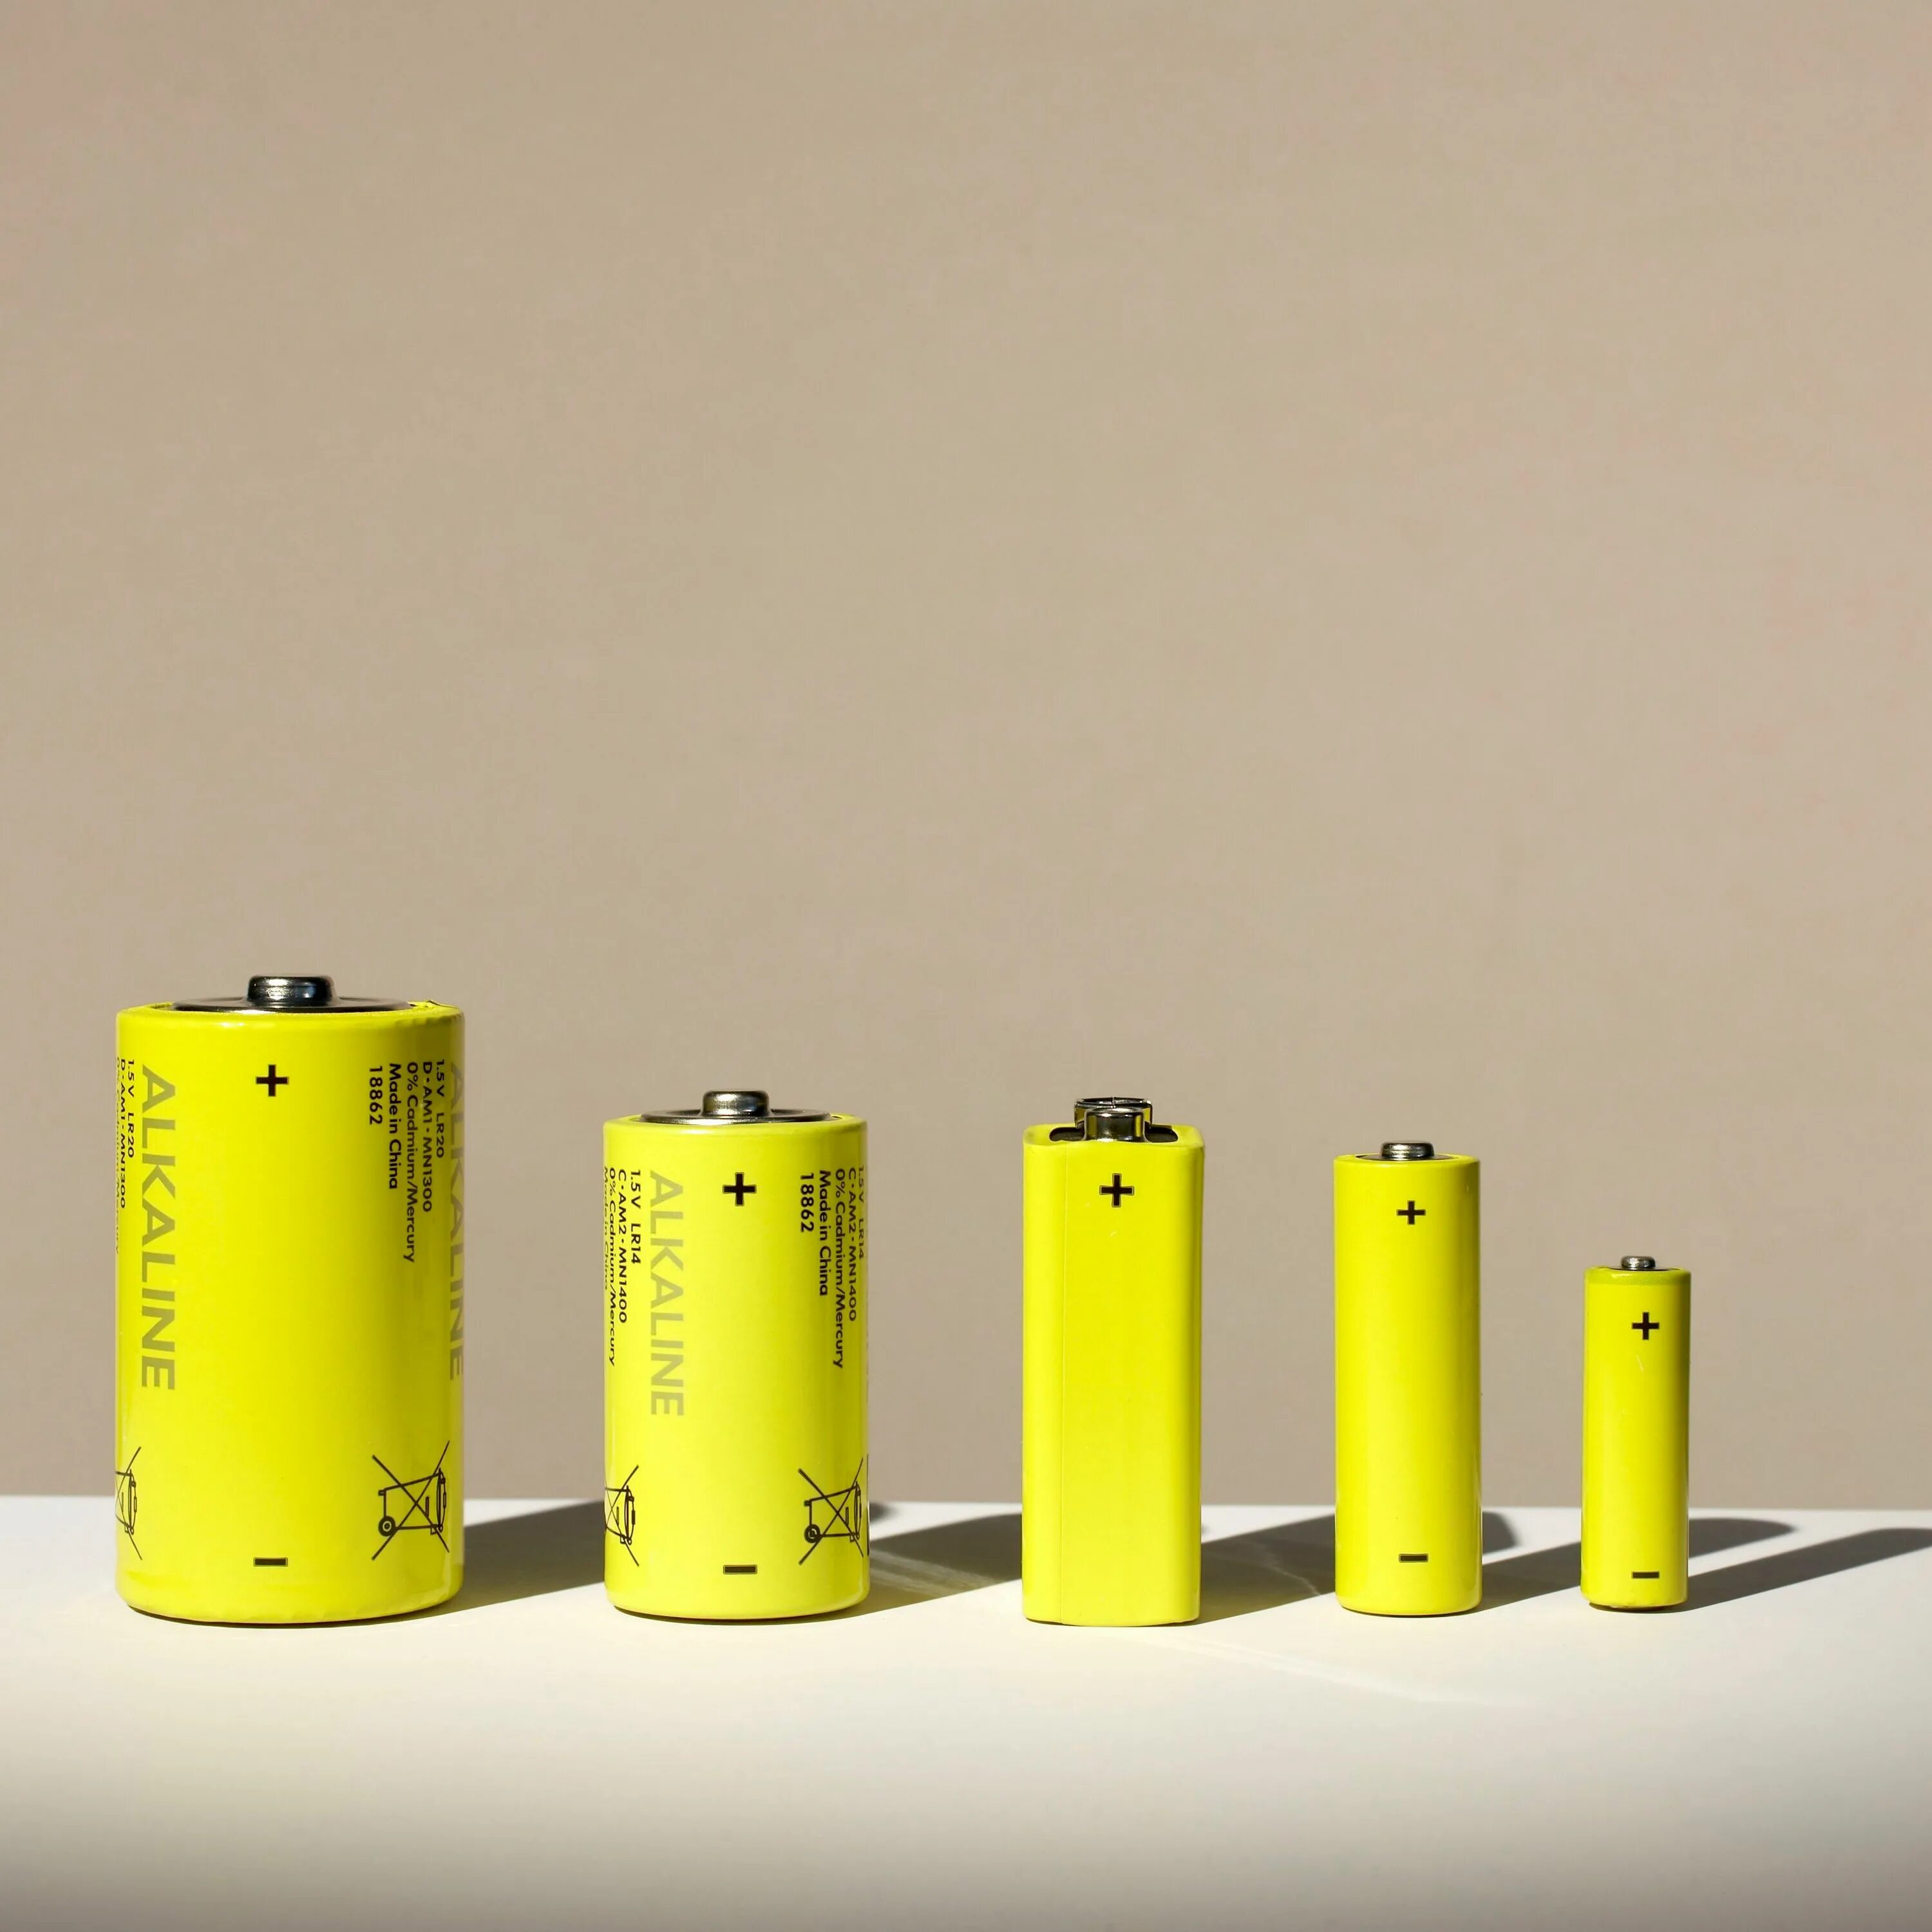 Batteries com. Желтая батарея. Best Battery аккумулятор. Утилизация литий ионных аккумуляторов. Bbest Battery аккумулятор.